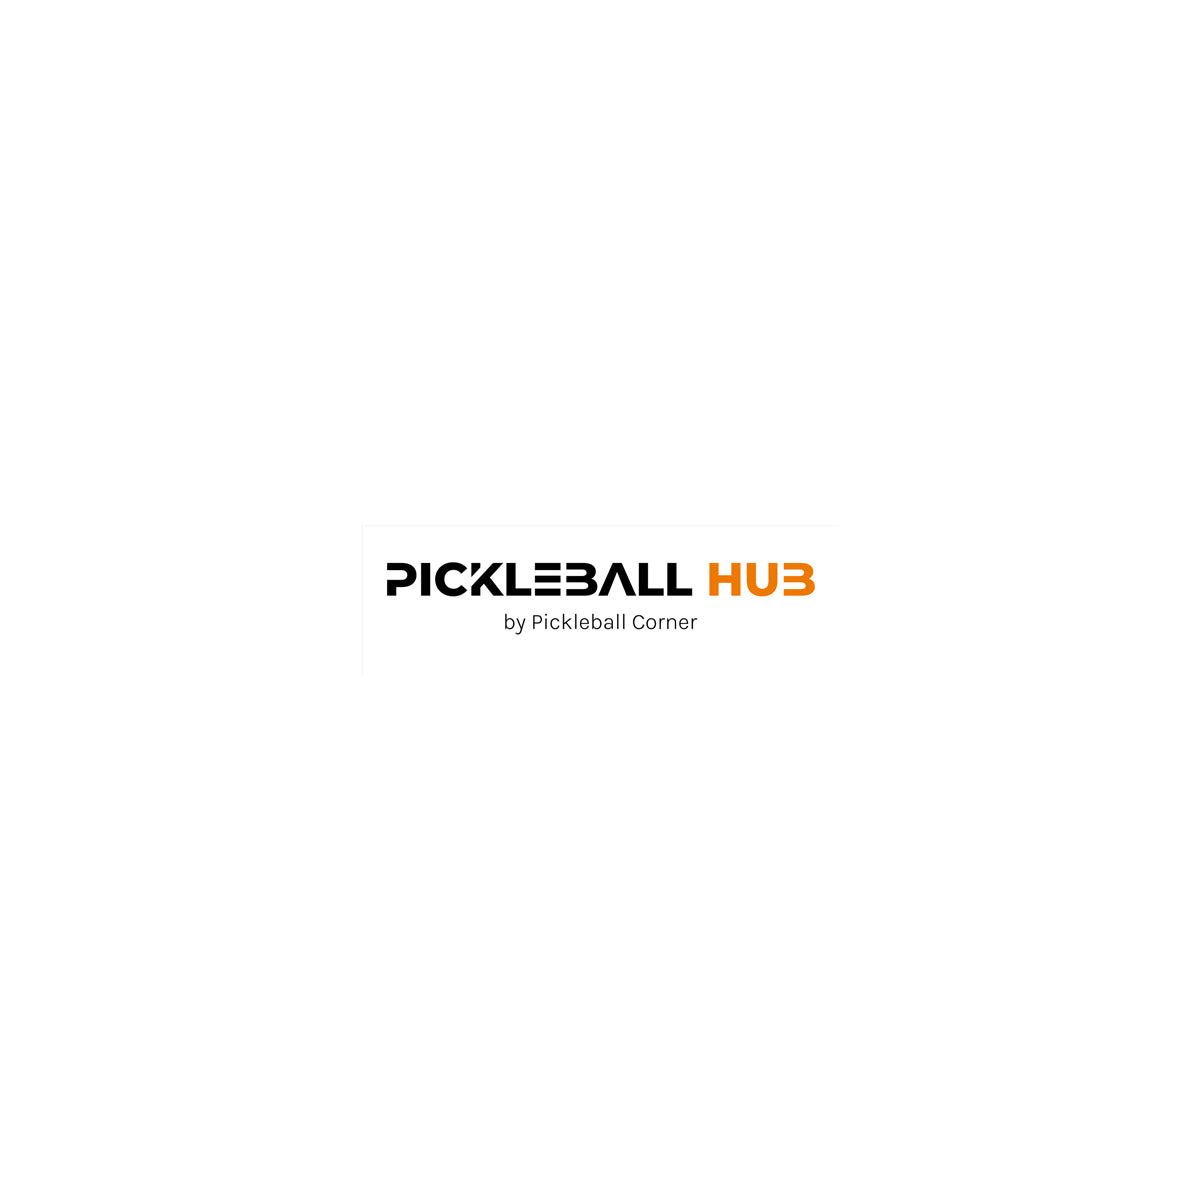 Referenz: Pickleball Hub